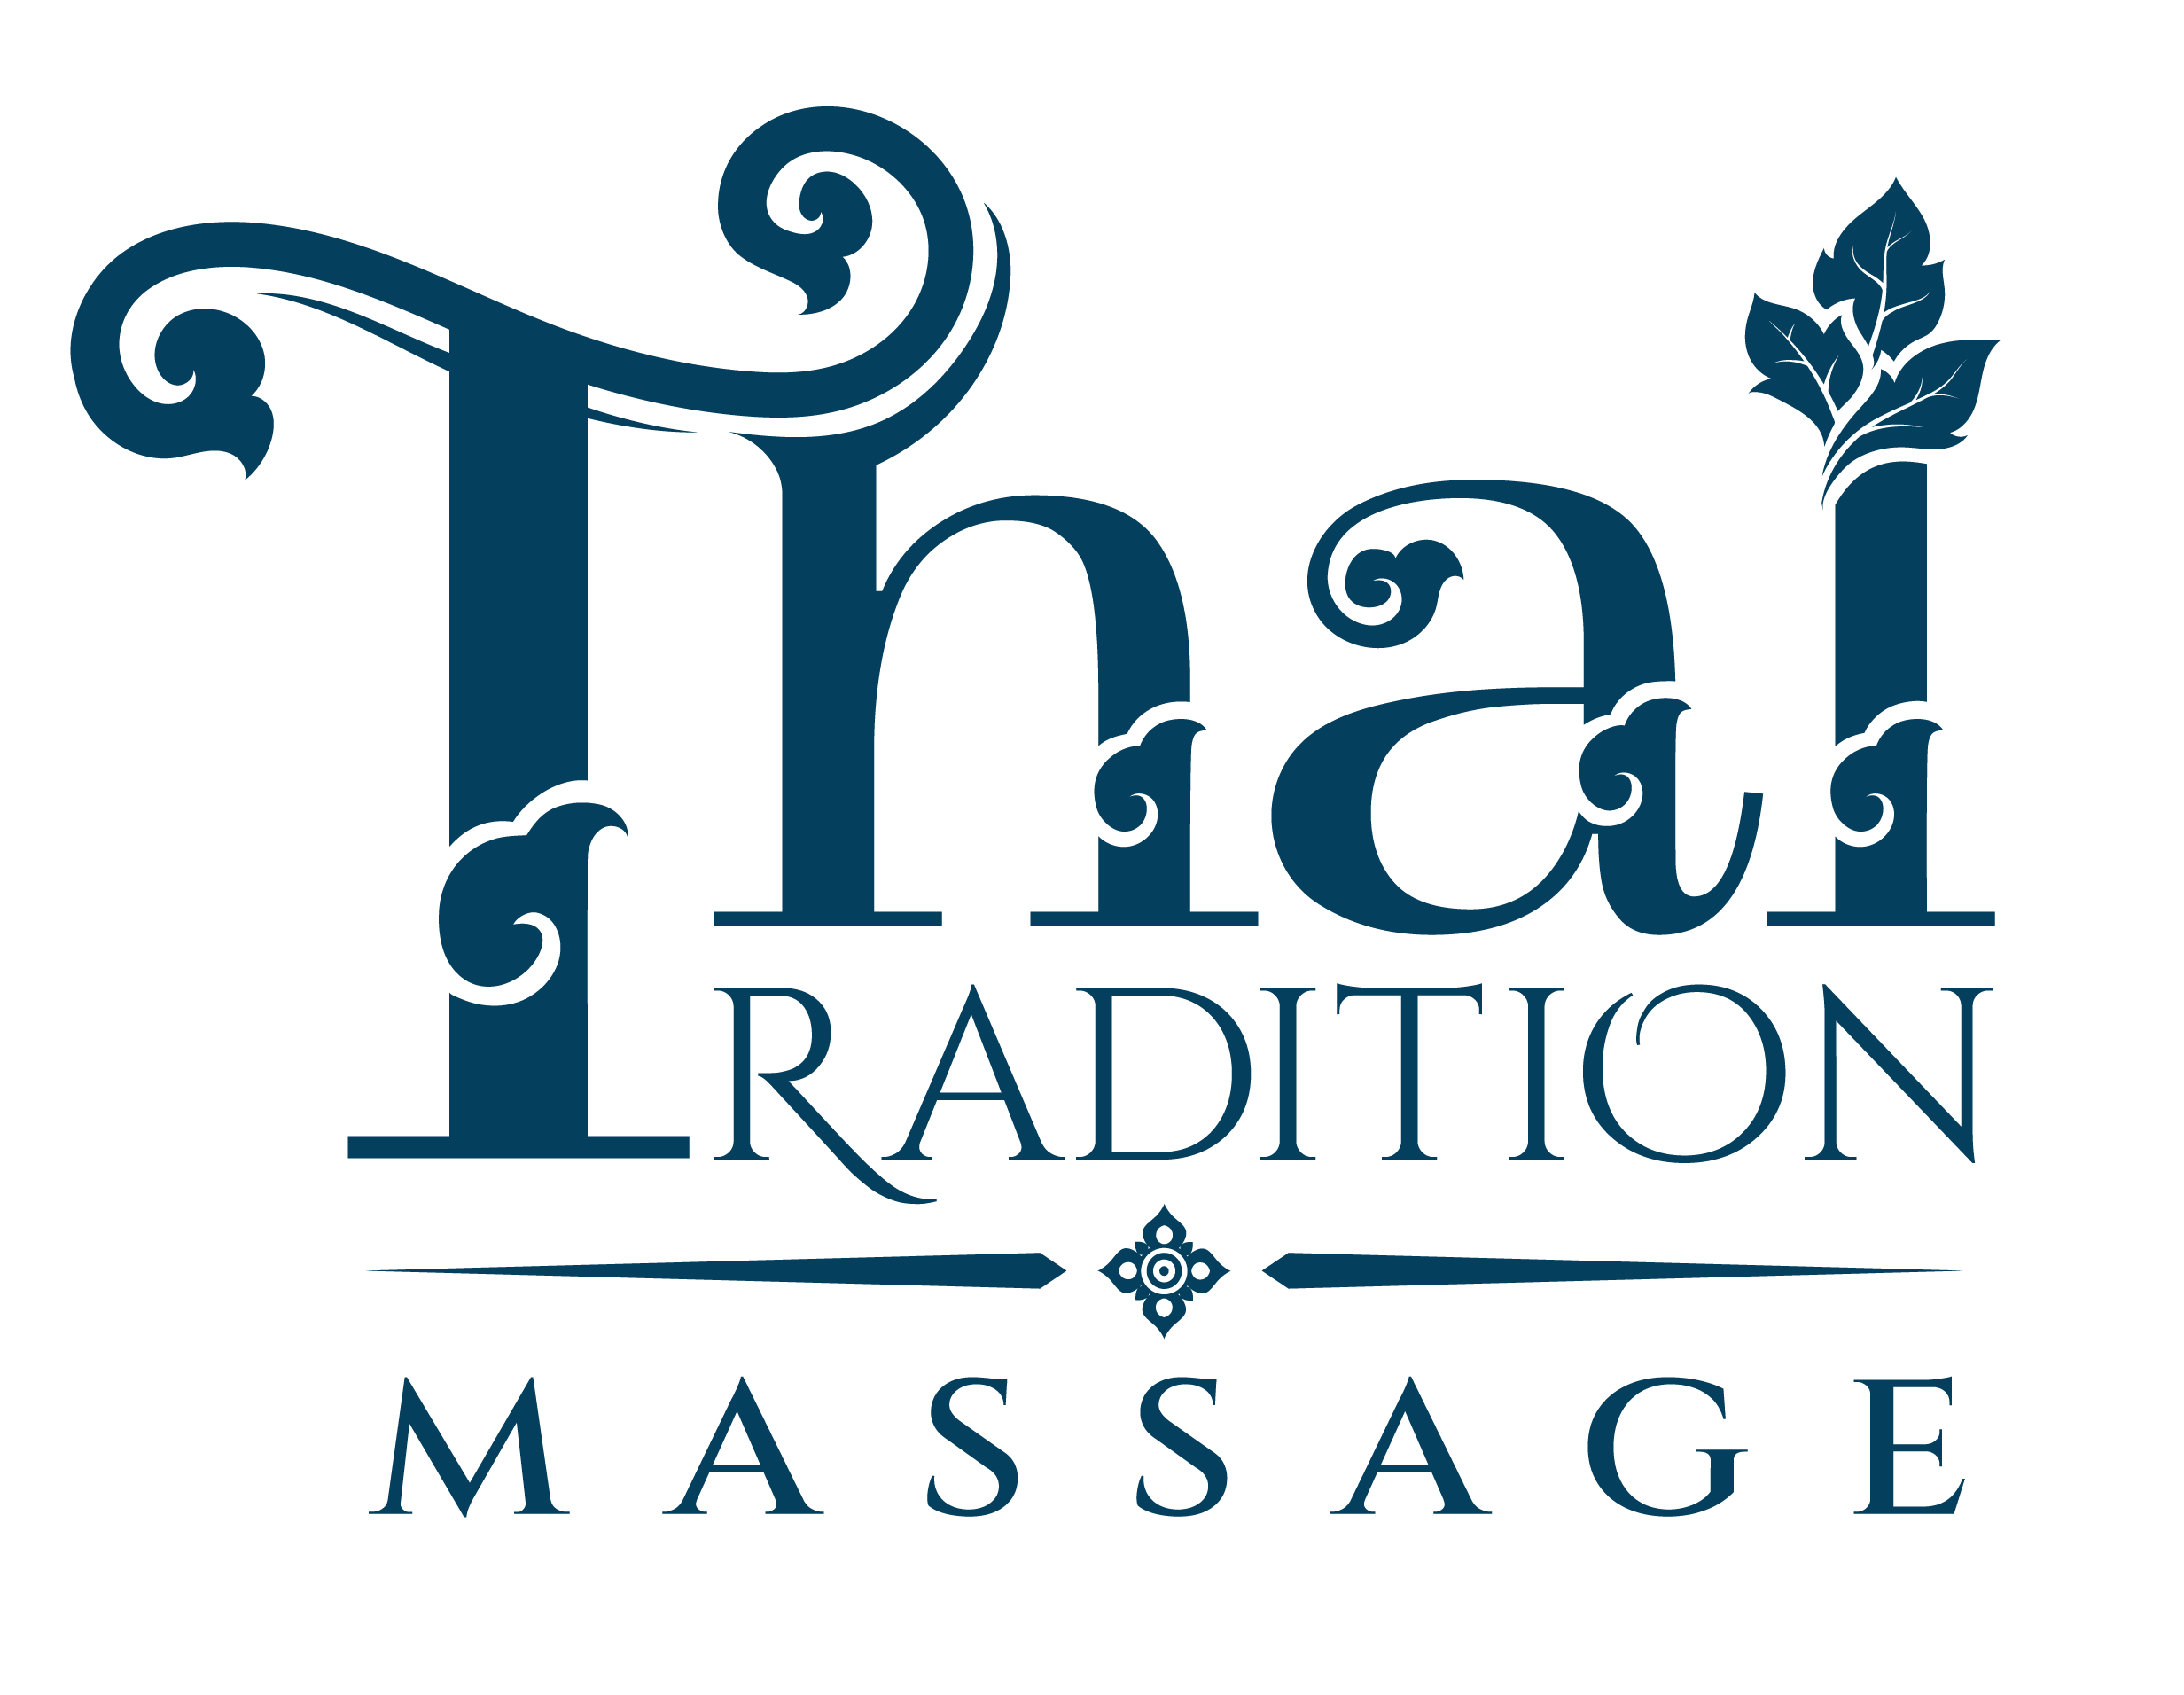 Thai Tradition Massage in El Cajon Blvd, San Diego CA